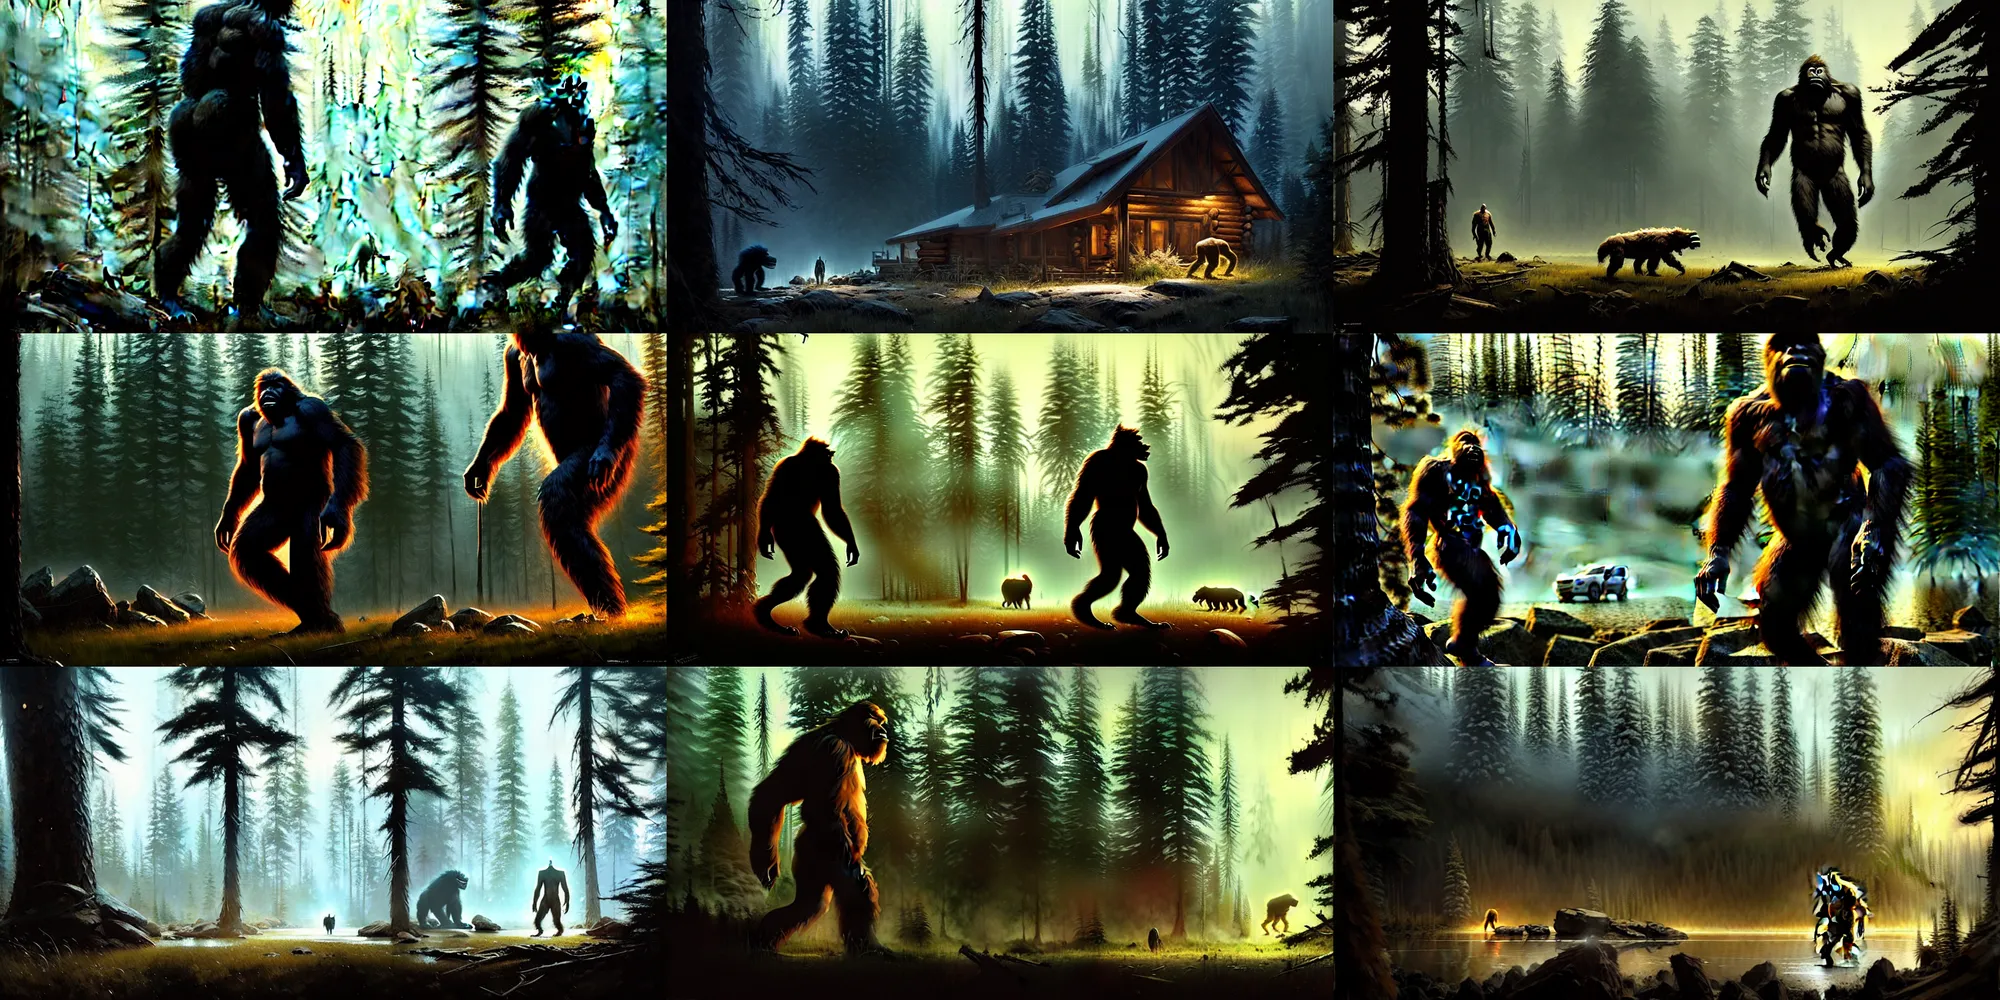 Prompt: sasquatch near a cabin in forest, concept art by greg rutkowski, Craig Mullins, Todd McFarlane, masterpiece, award-winning, sharp focus, intricate concept art, ambient lighting, 8k, artstation